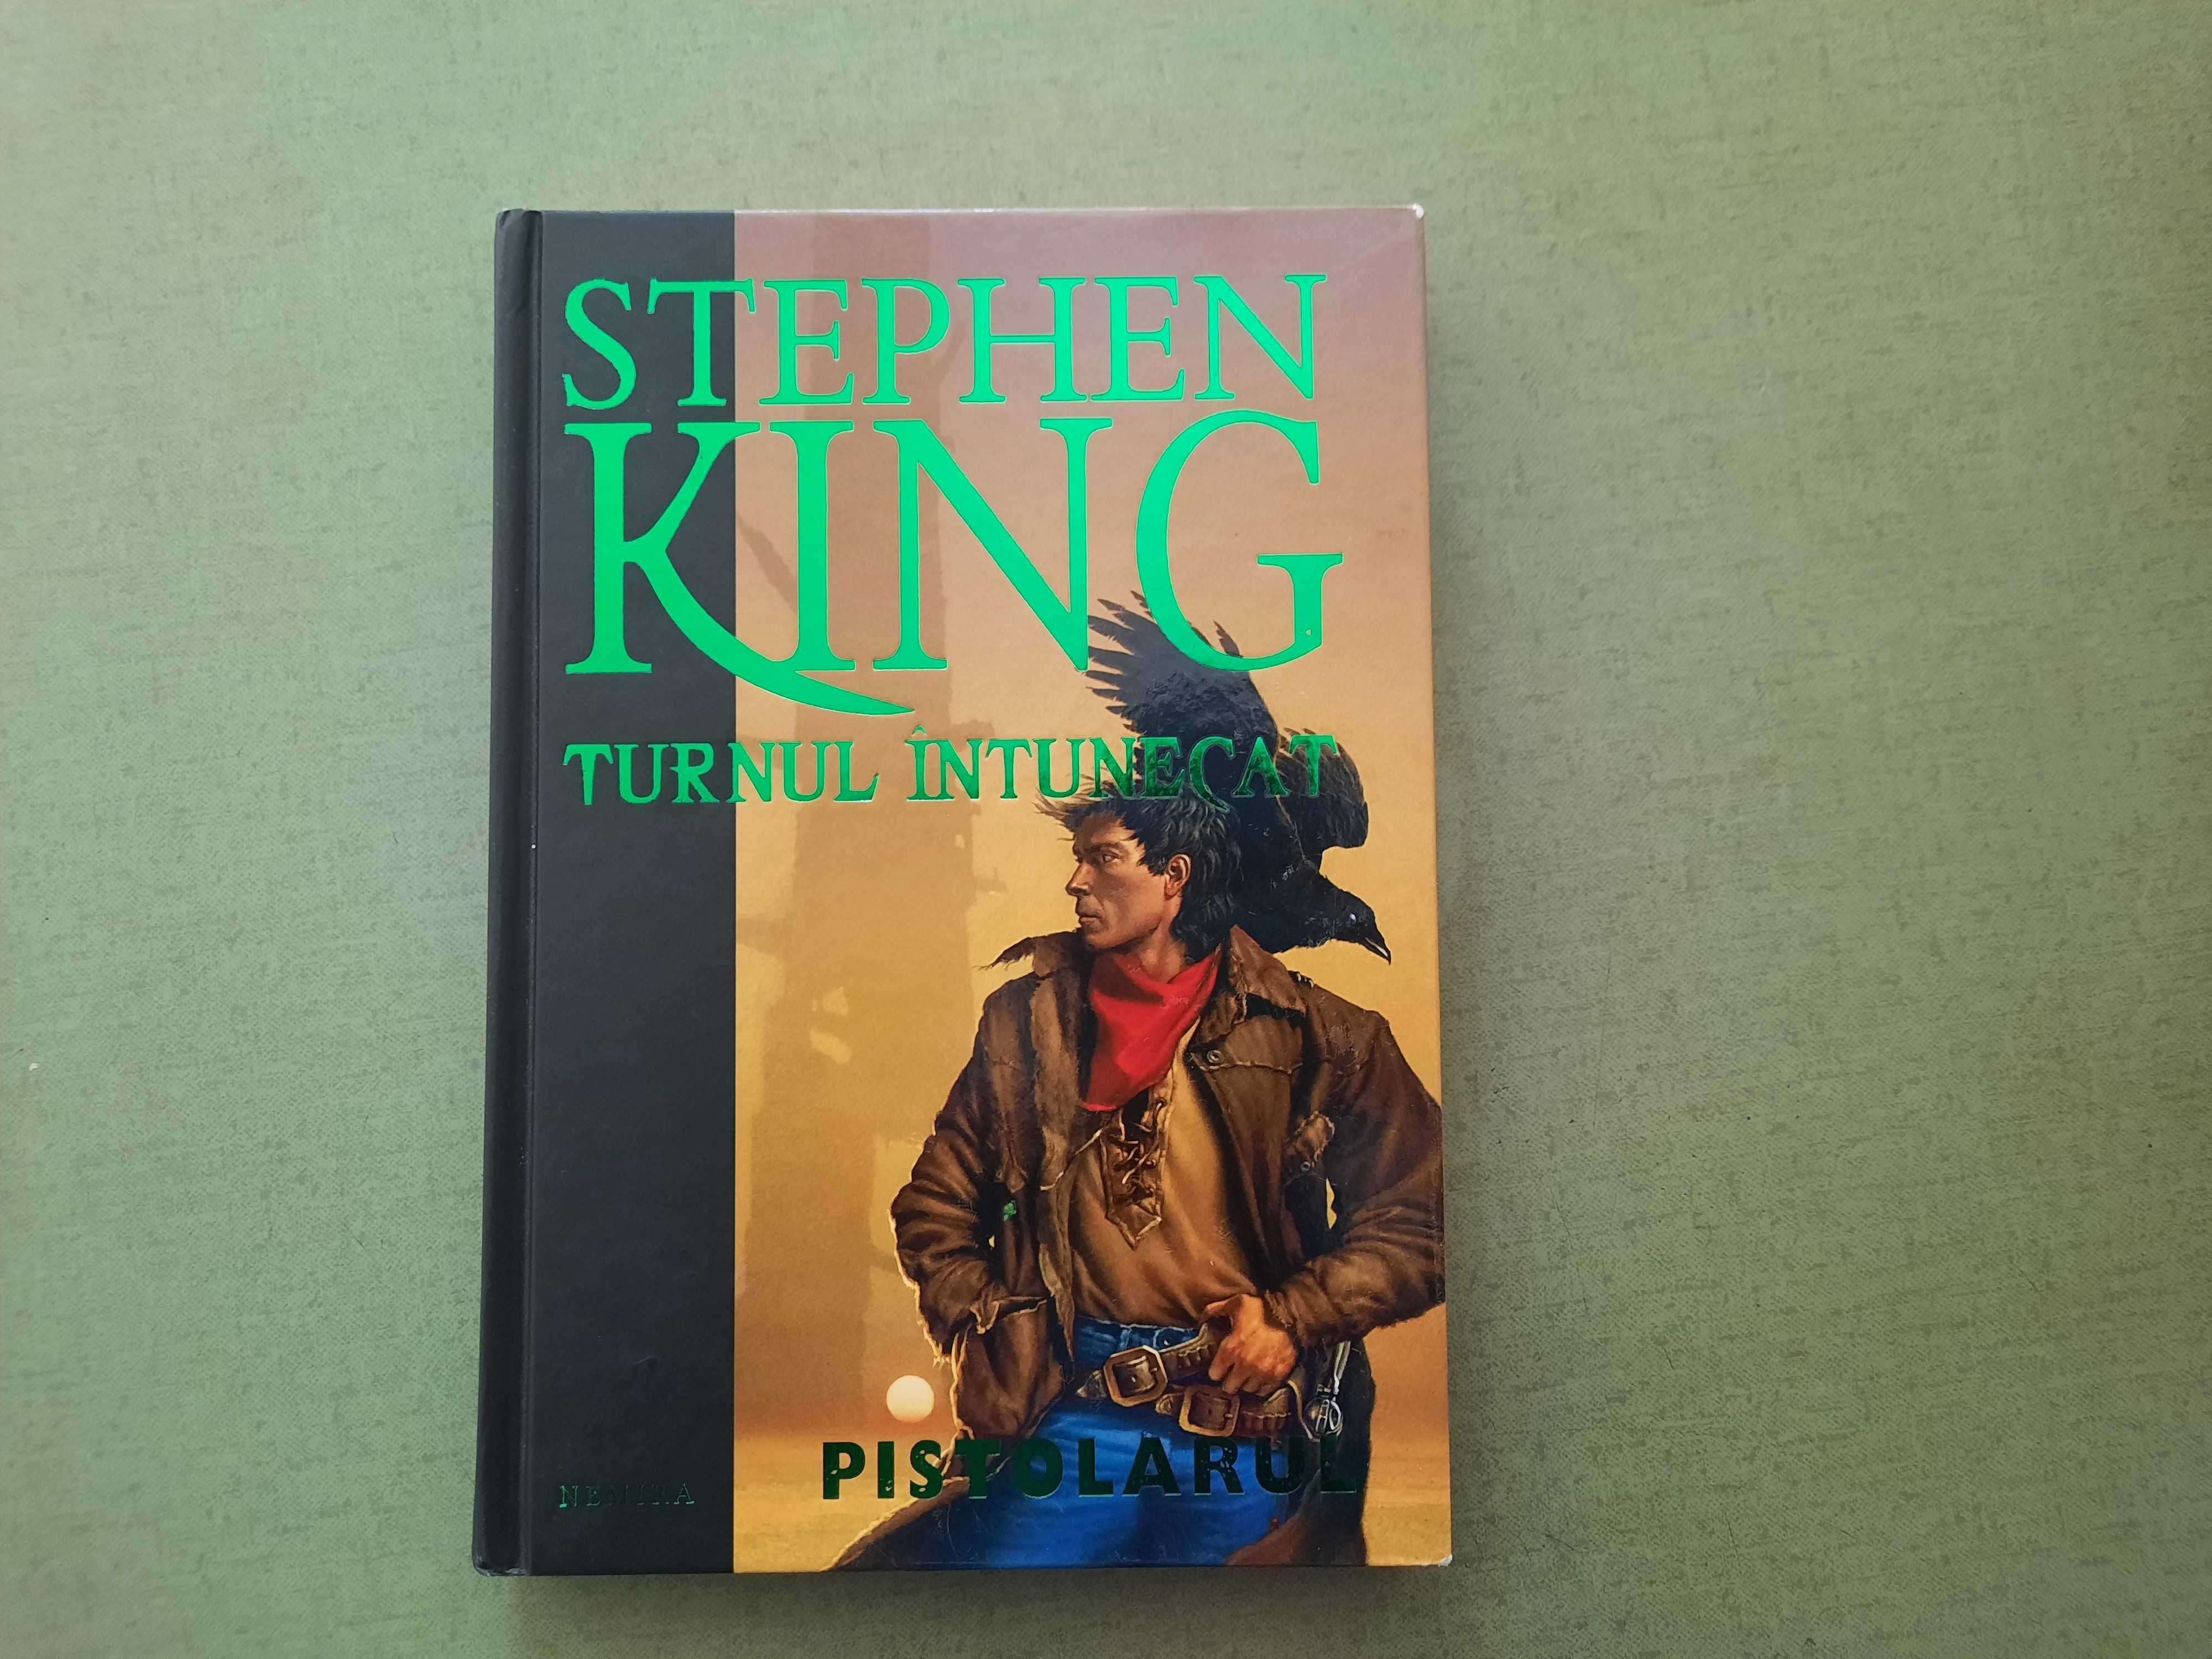 Stephen King - Turnul intunecat vol. 1 - Pistolarul